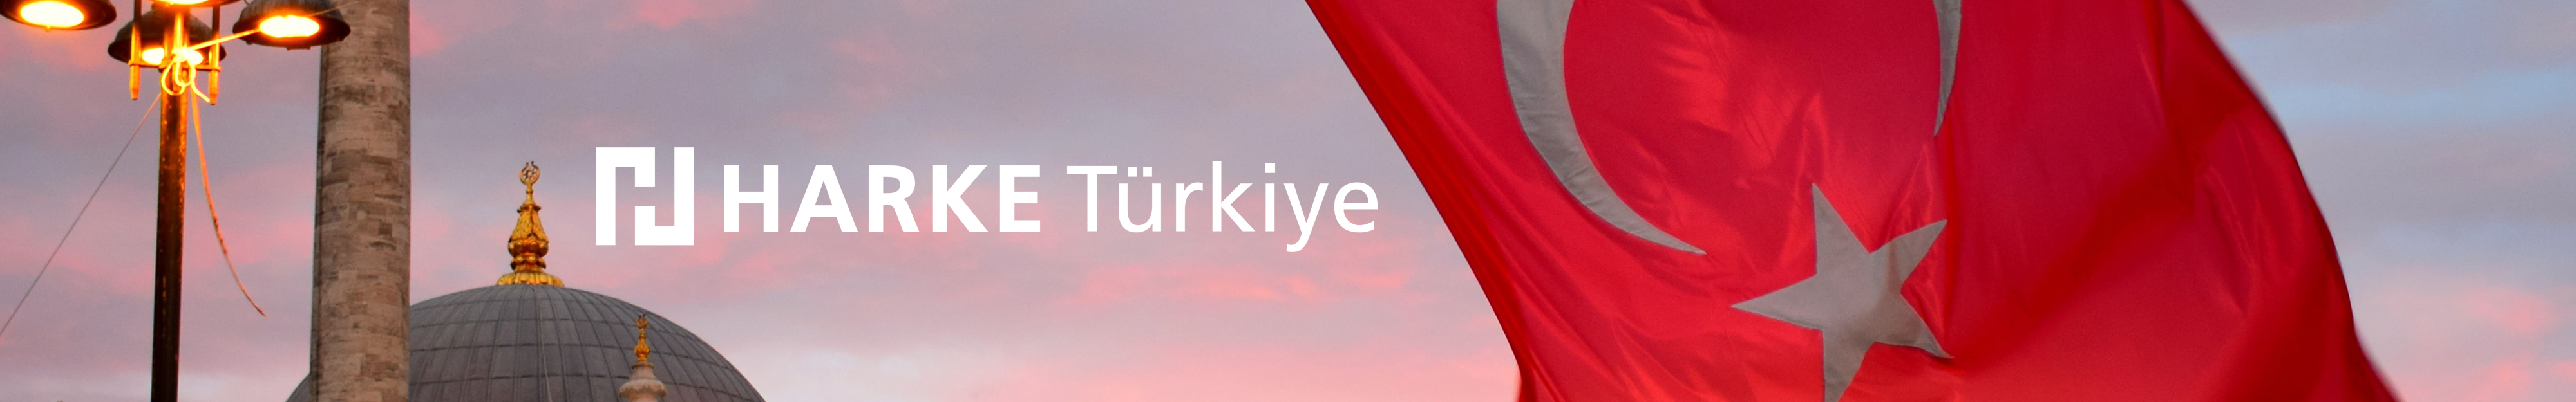 Subsidiaries-Turkey.png